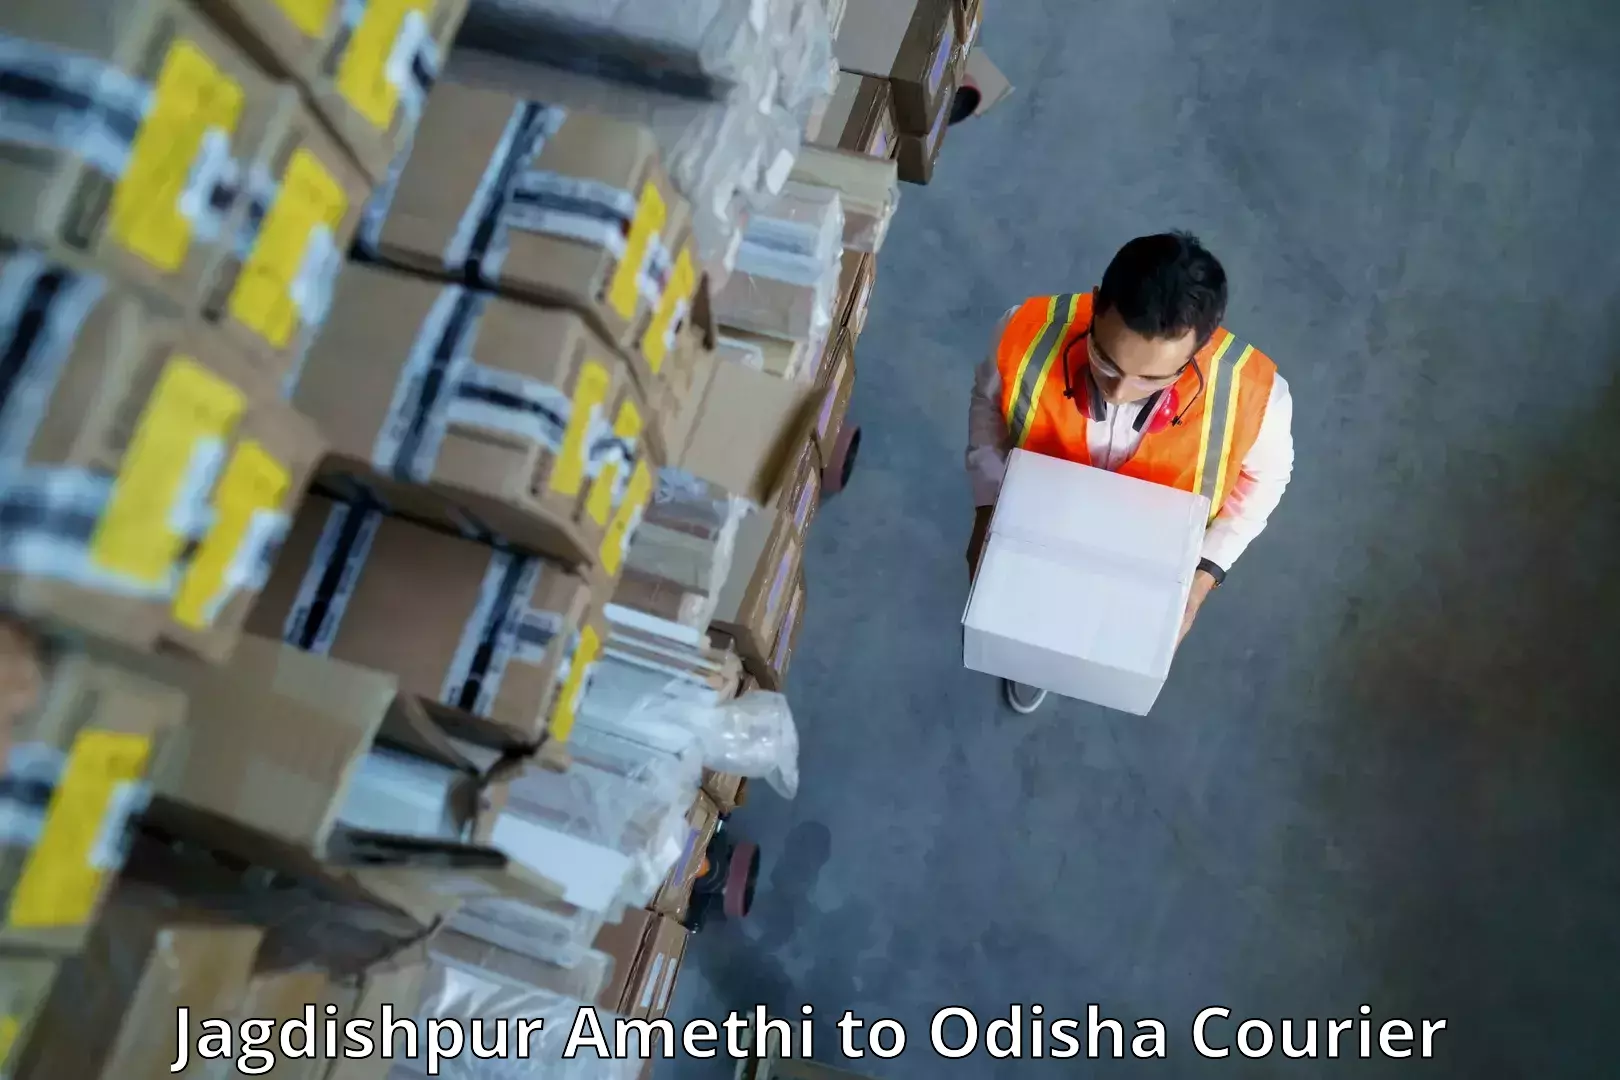 International parcel service Jagdishpur Amethi to Joda